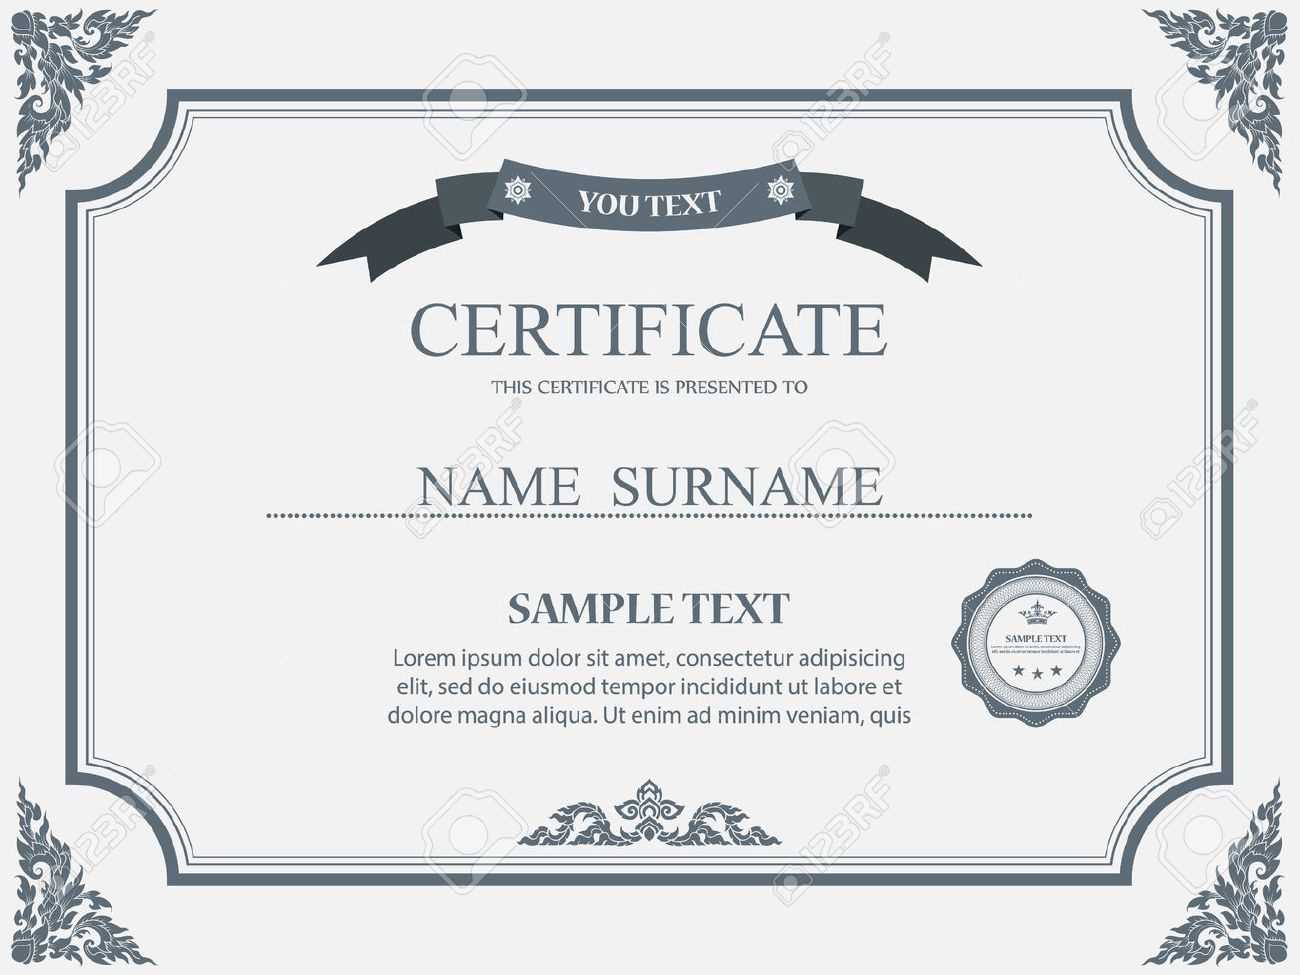 Vector Certificate Template. With Regard To Commemorative Certificate Template